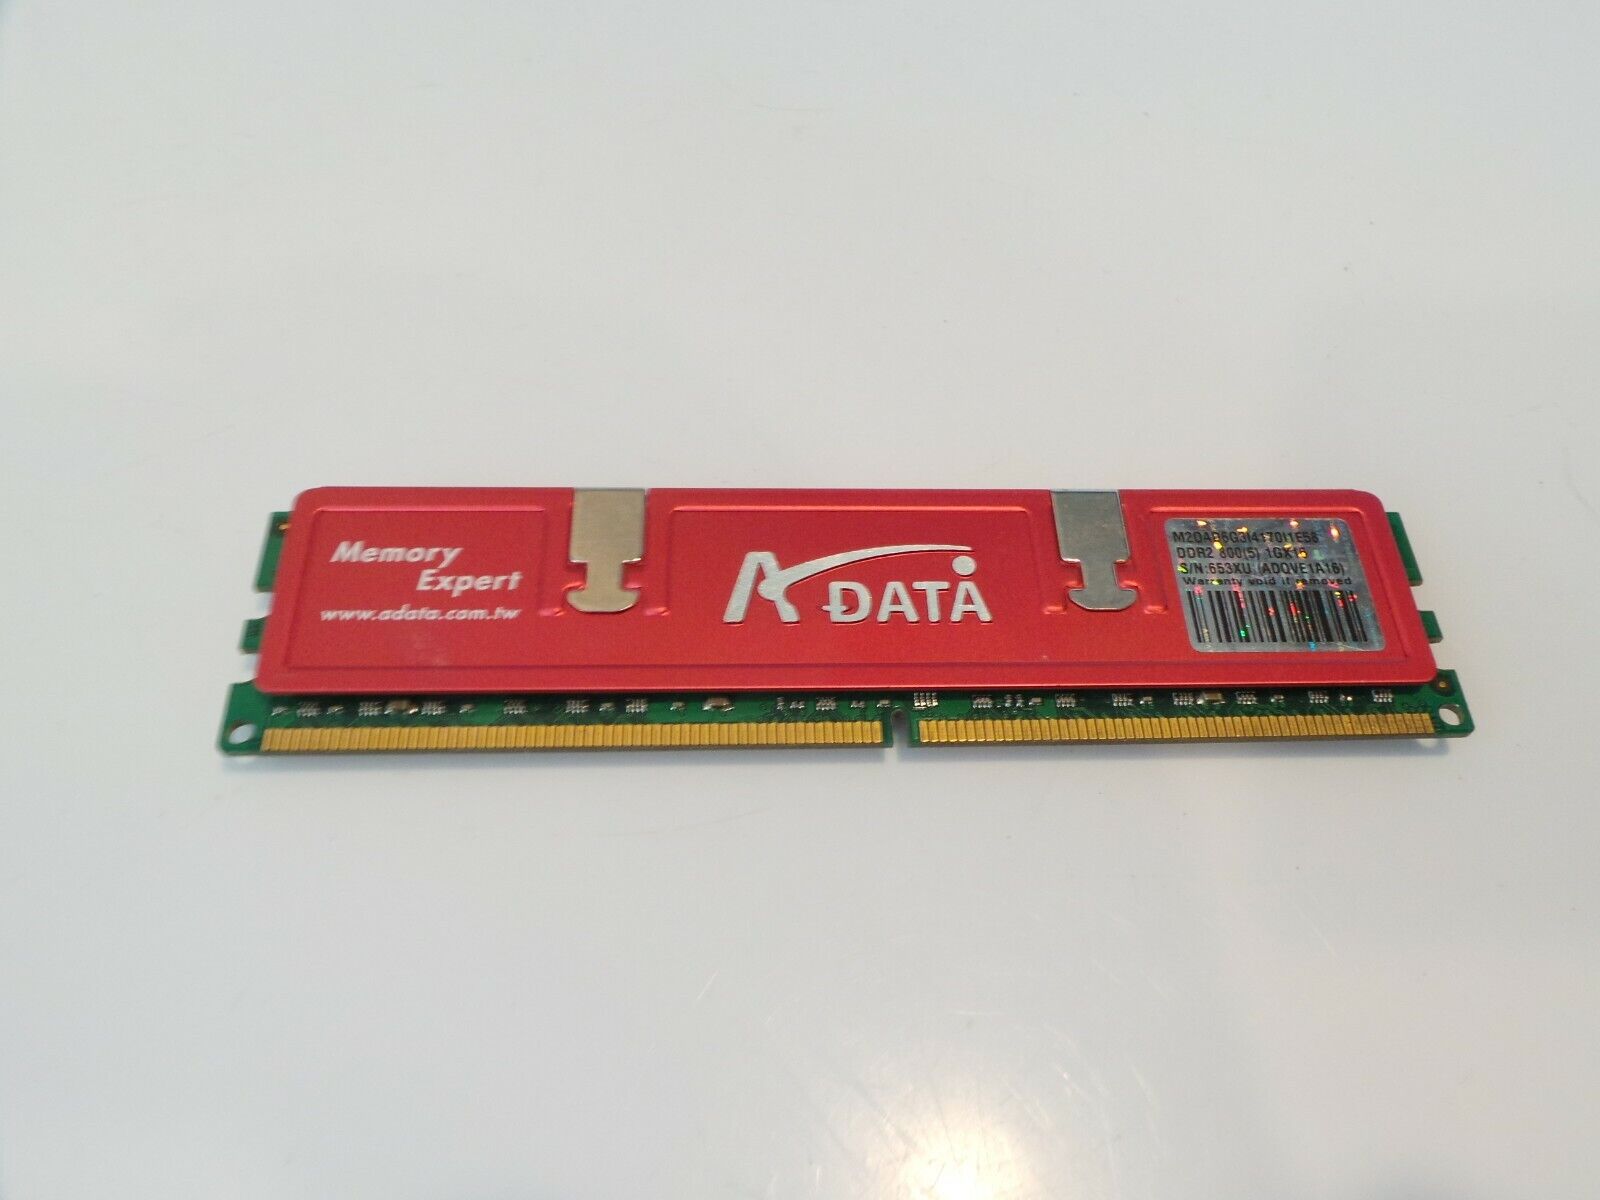 ADATA Memory 1GB M2OAD6G314I70I1E58 DDR2 800(5) 1GX16  Desktop RAM